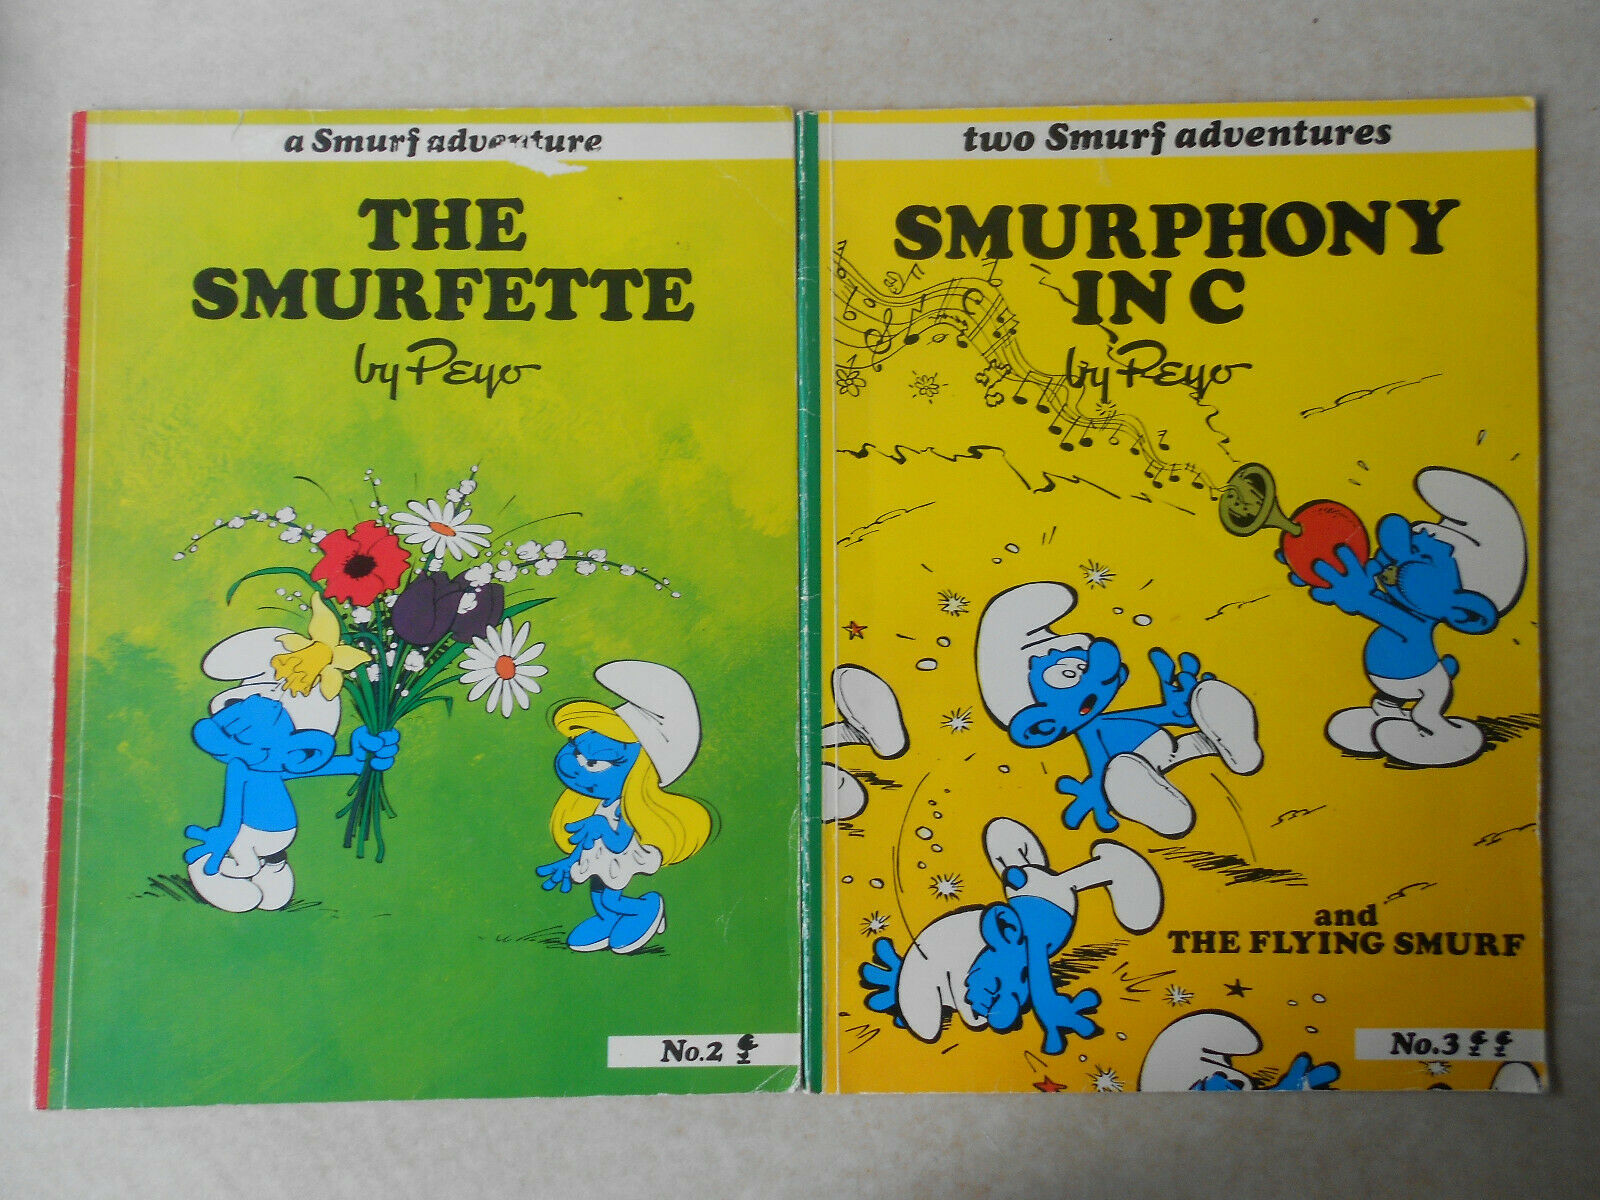 Smurf Comic Books The Weather Smurfing Machine The Smurfic Games